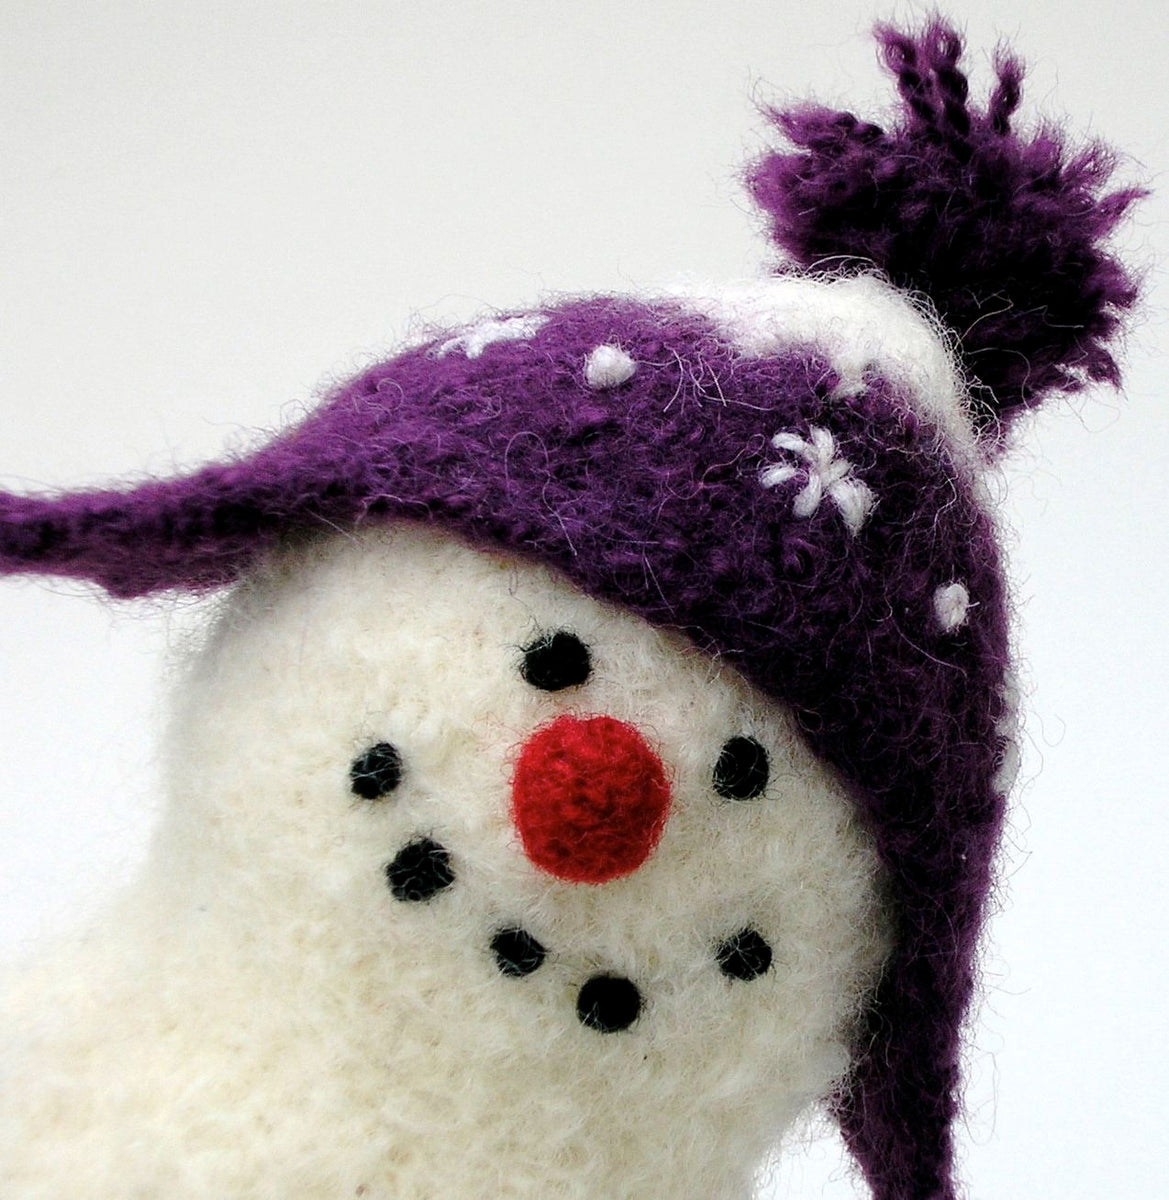 How to Make a Felt Snowman Top hat